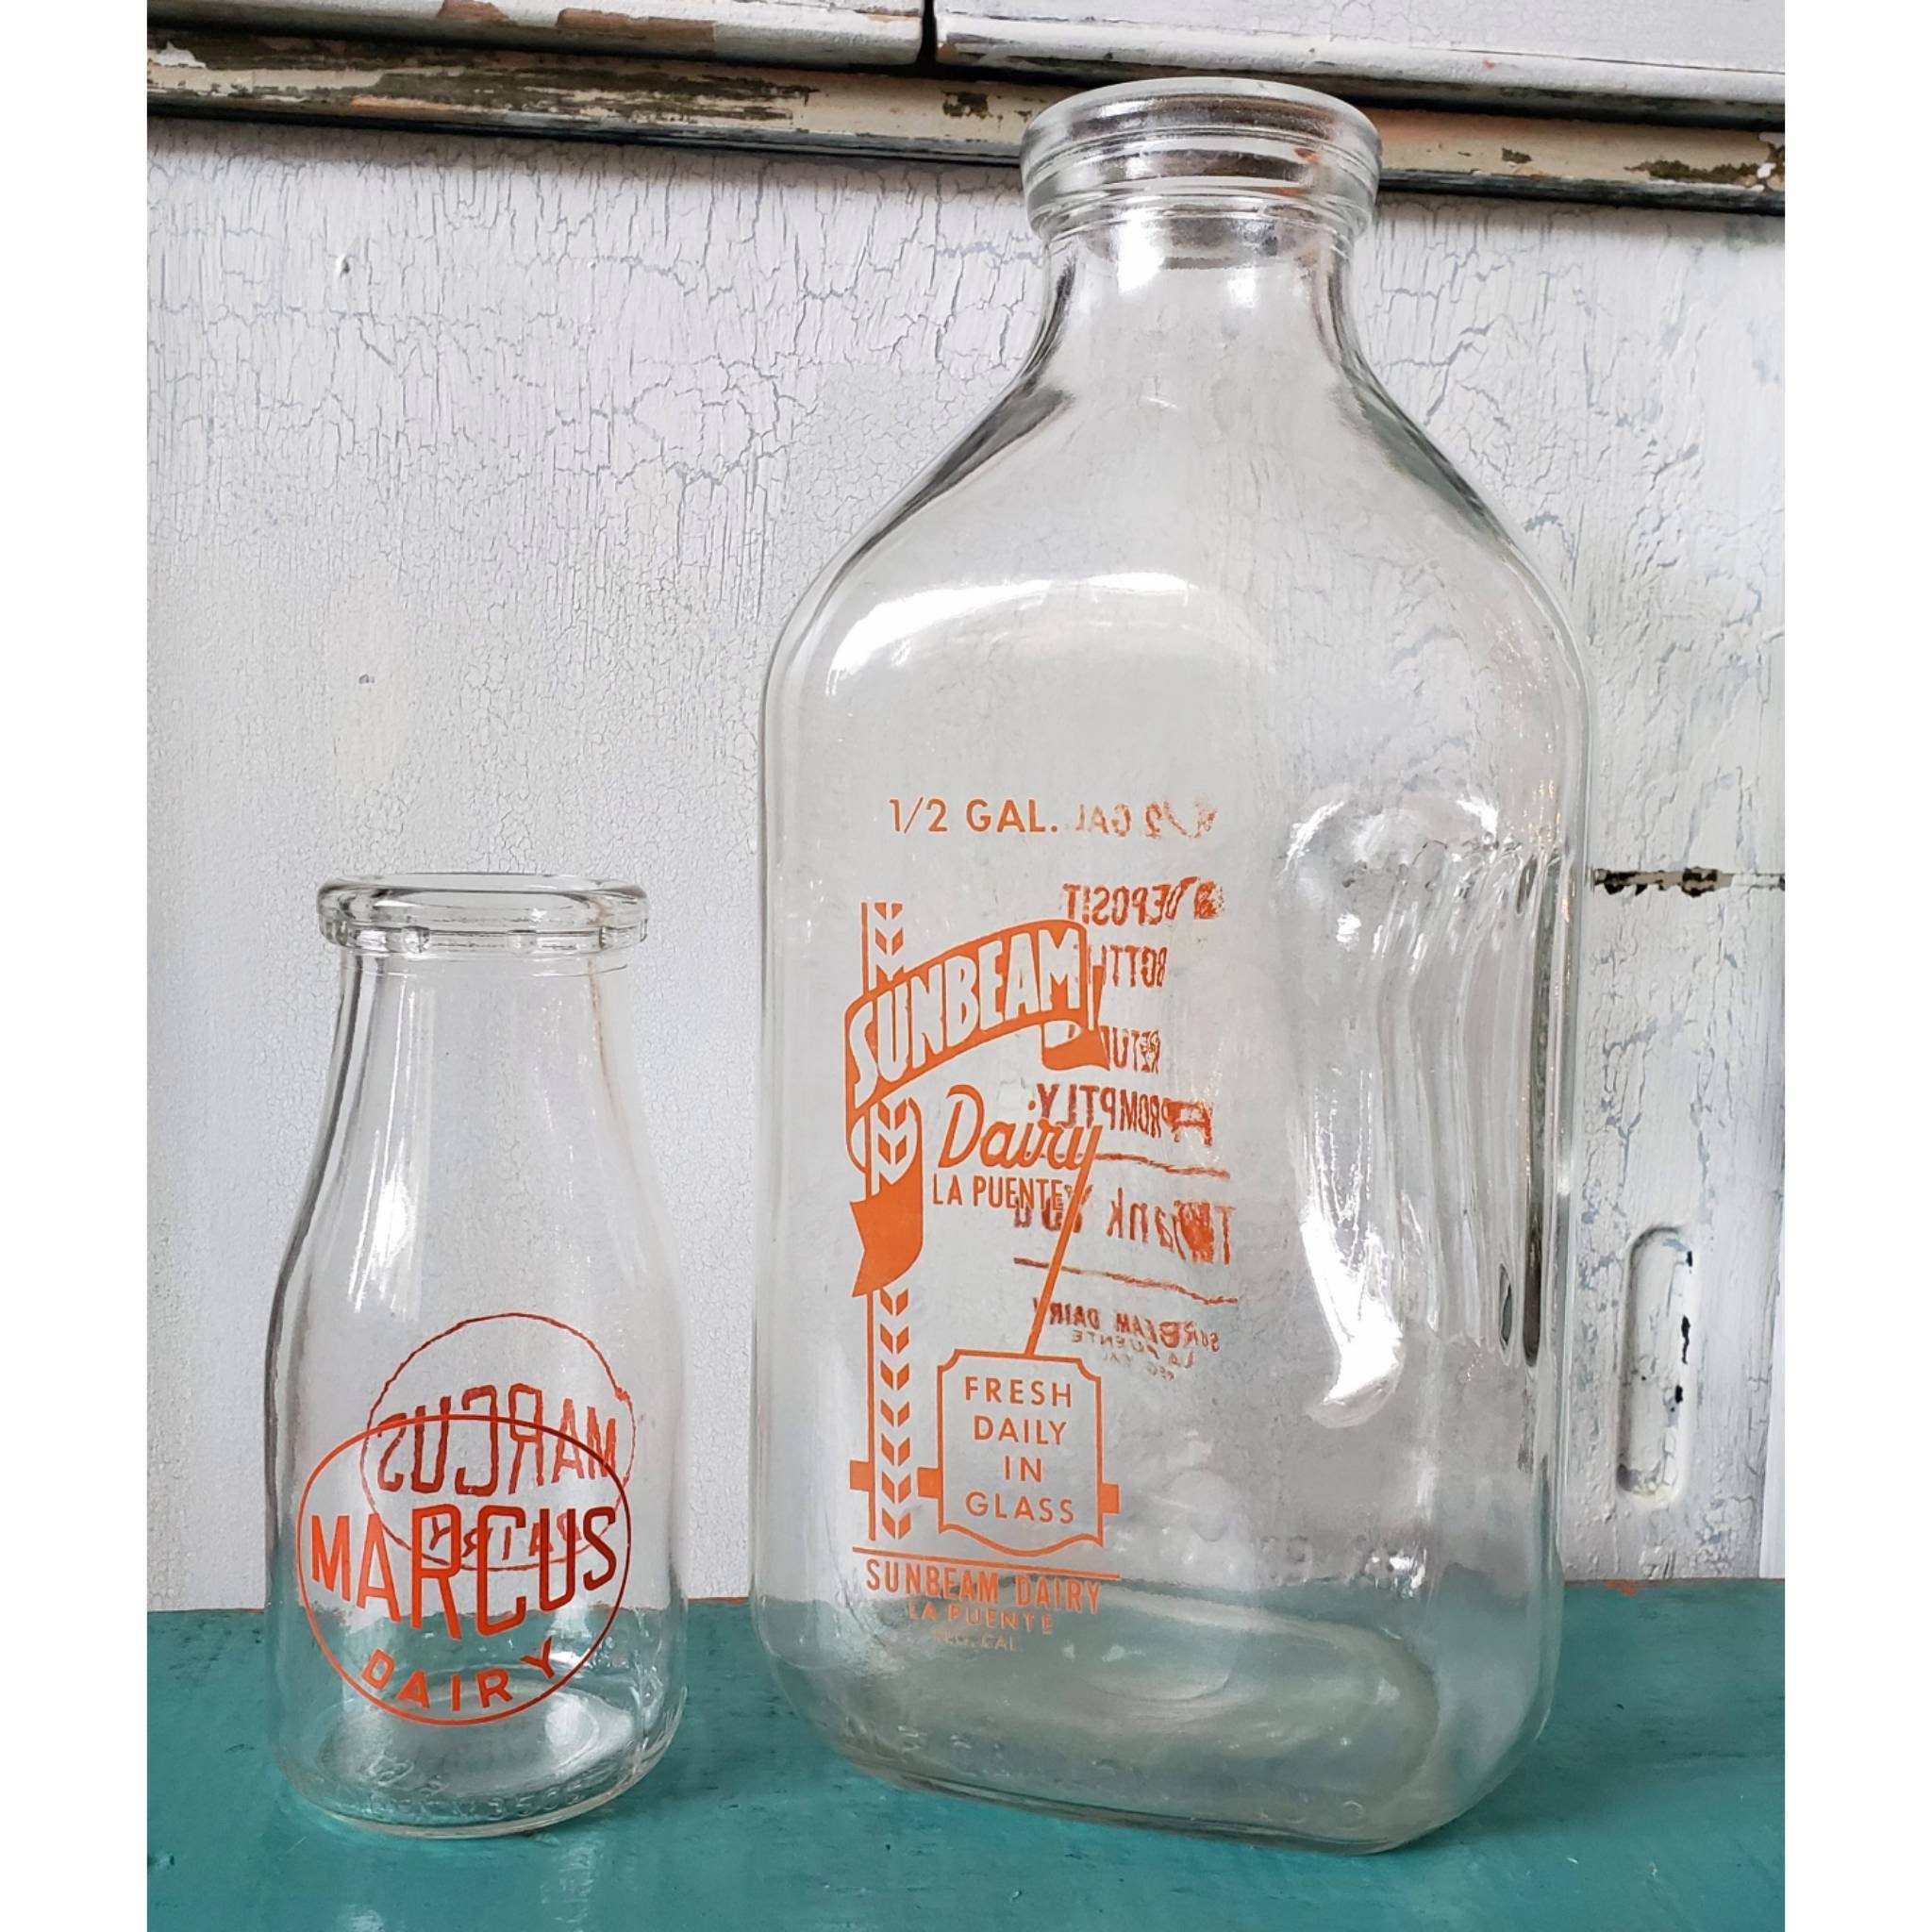 QAPPDA 12 oz Glass Bottles, Glass Milk Bottles with Lids, Vintage Breakfast Shake Container, Vintage Drinking Bottles with Chalkboard Labels and Pen